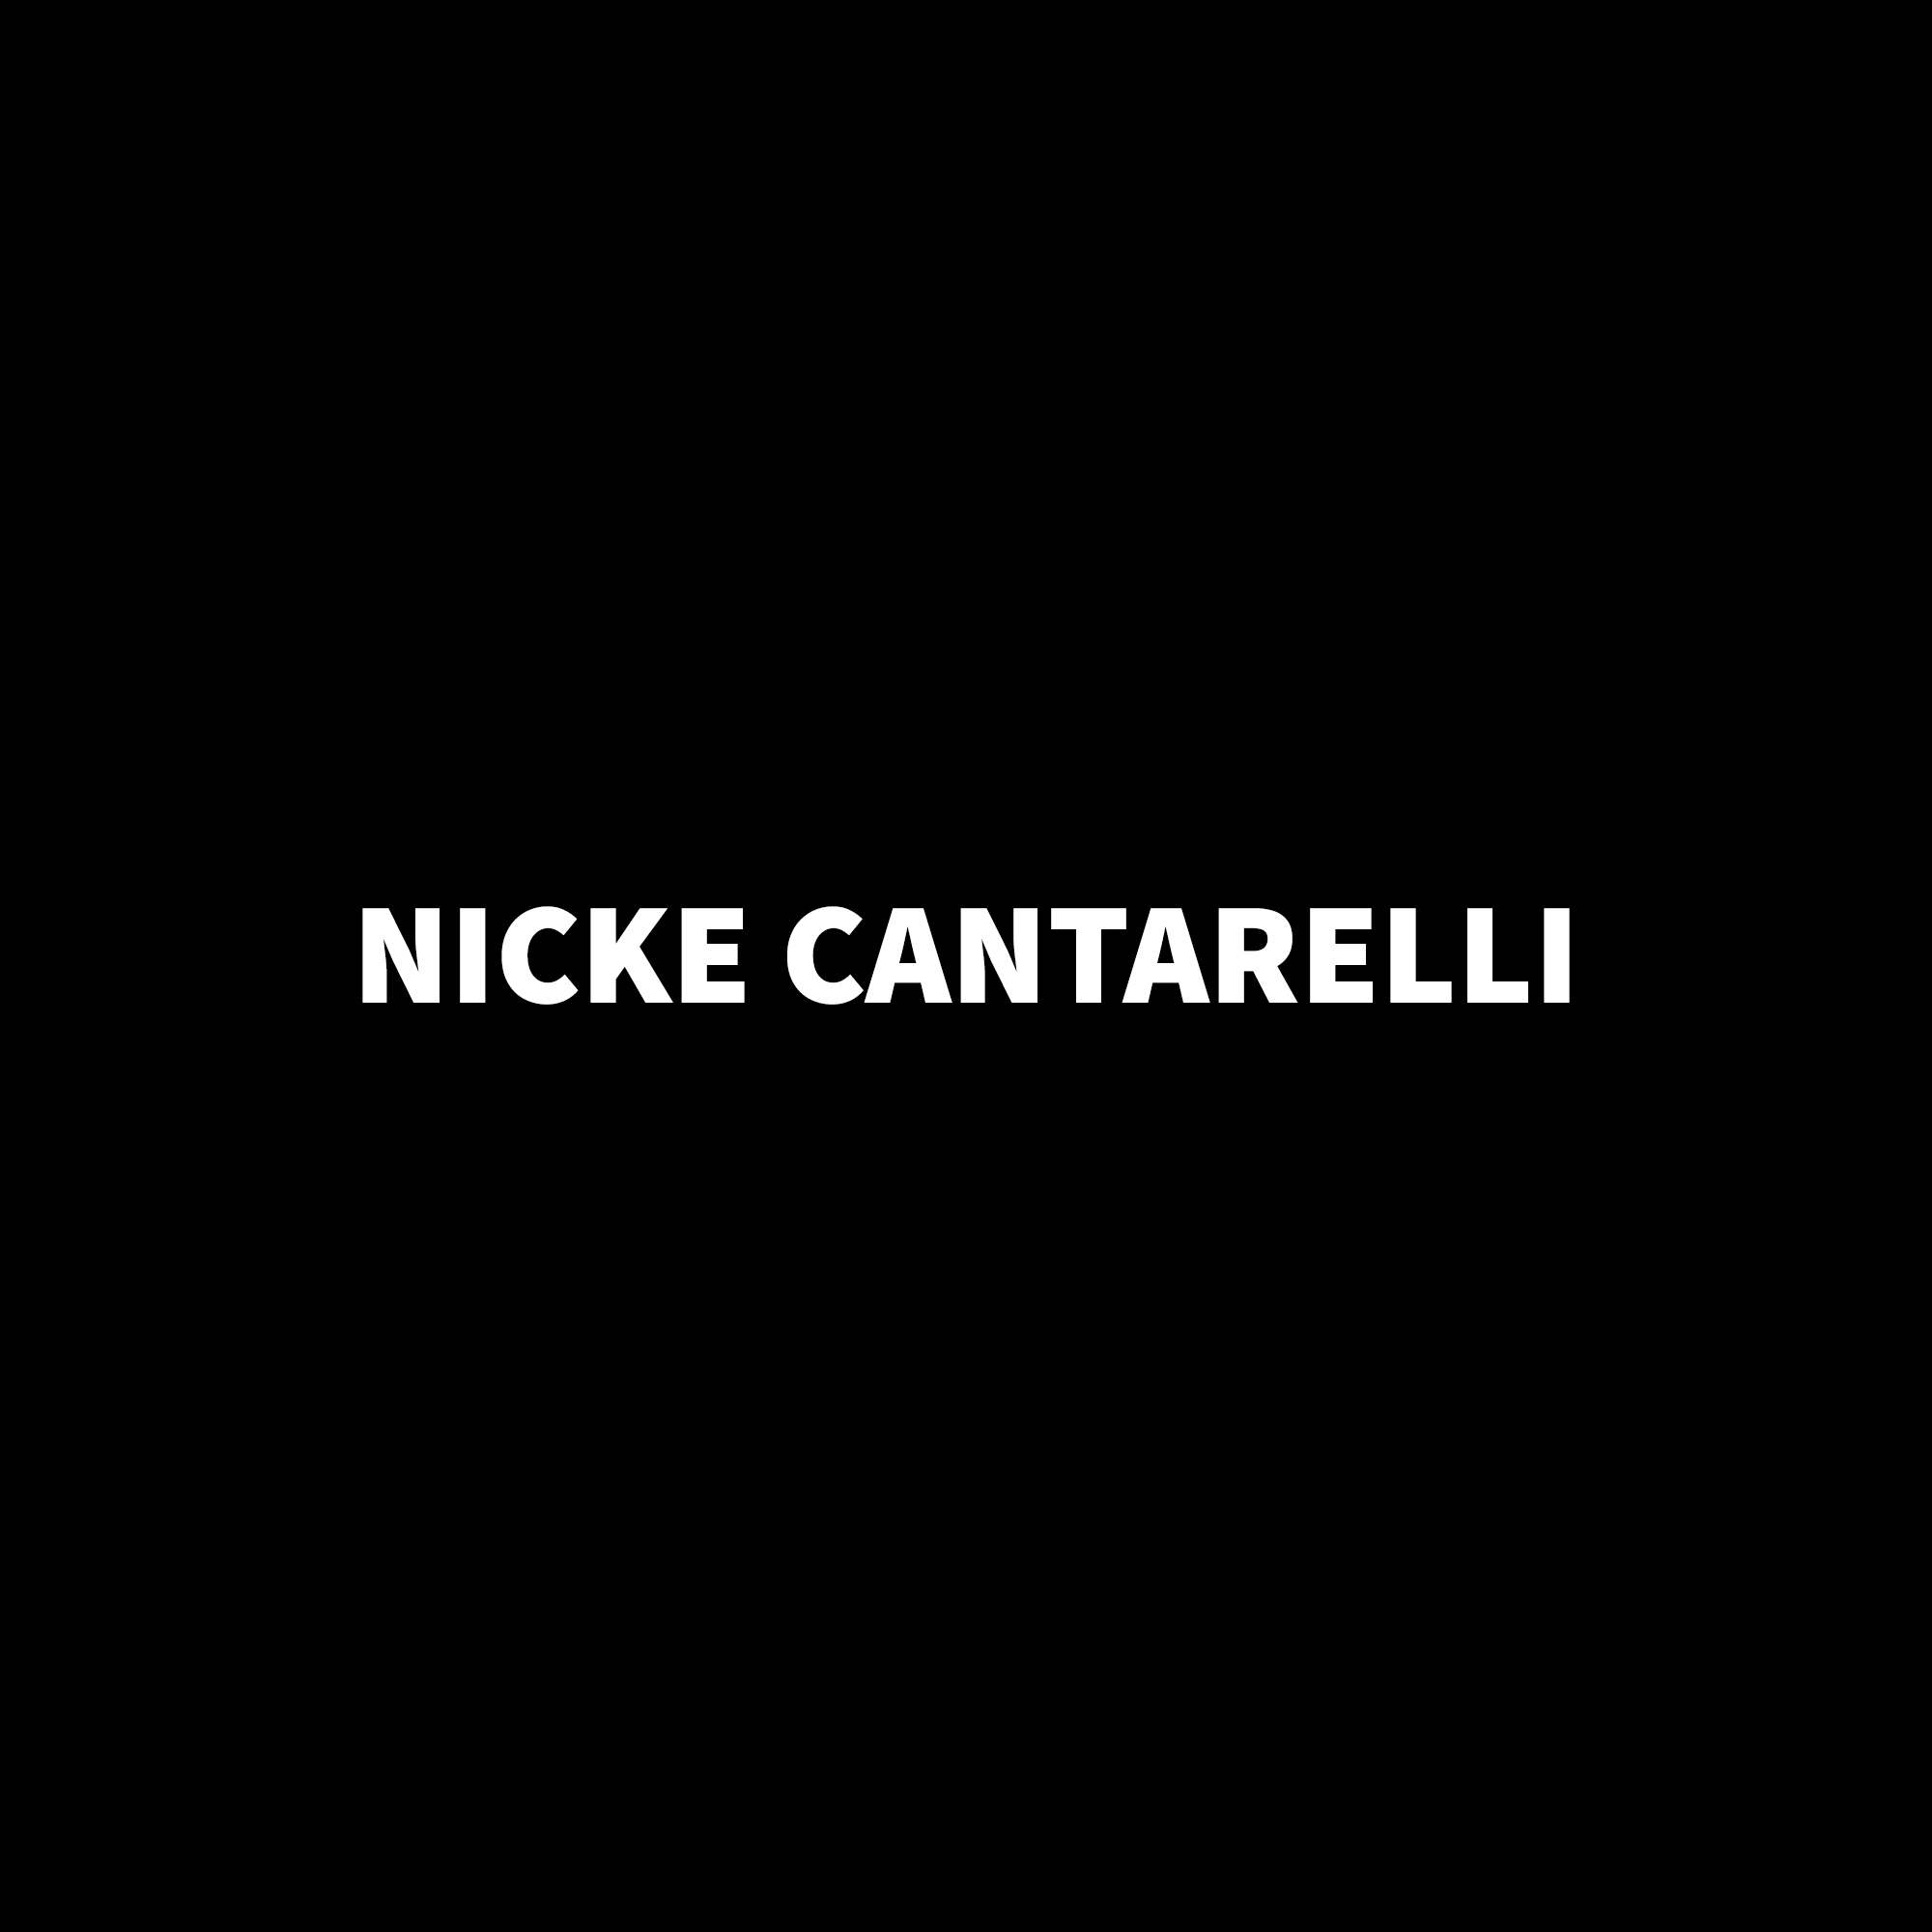 Nicke Cantarelli